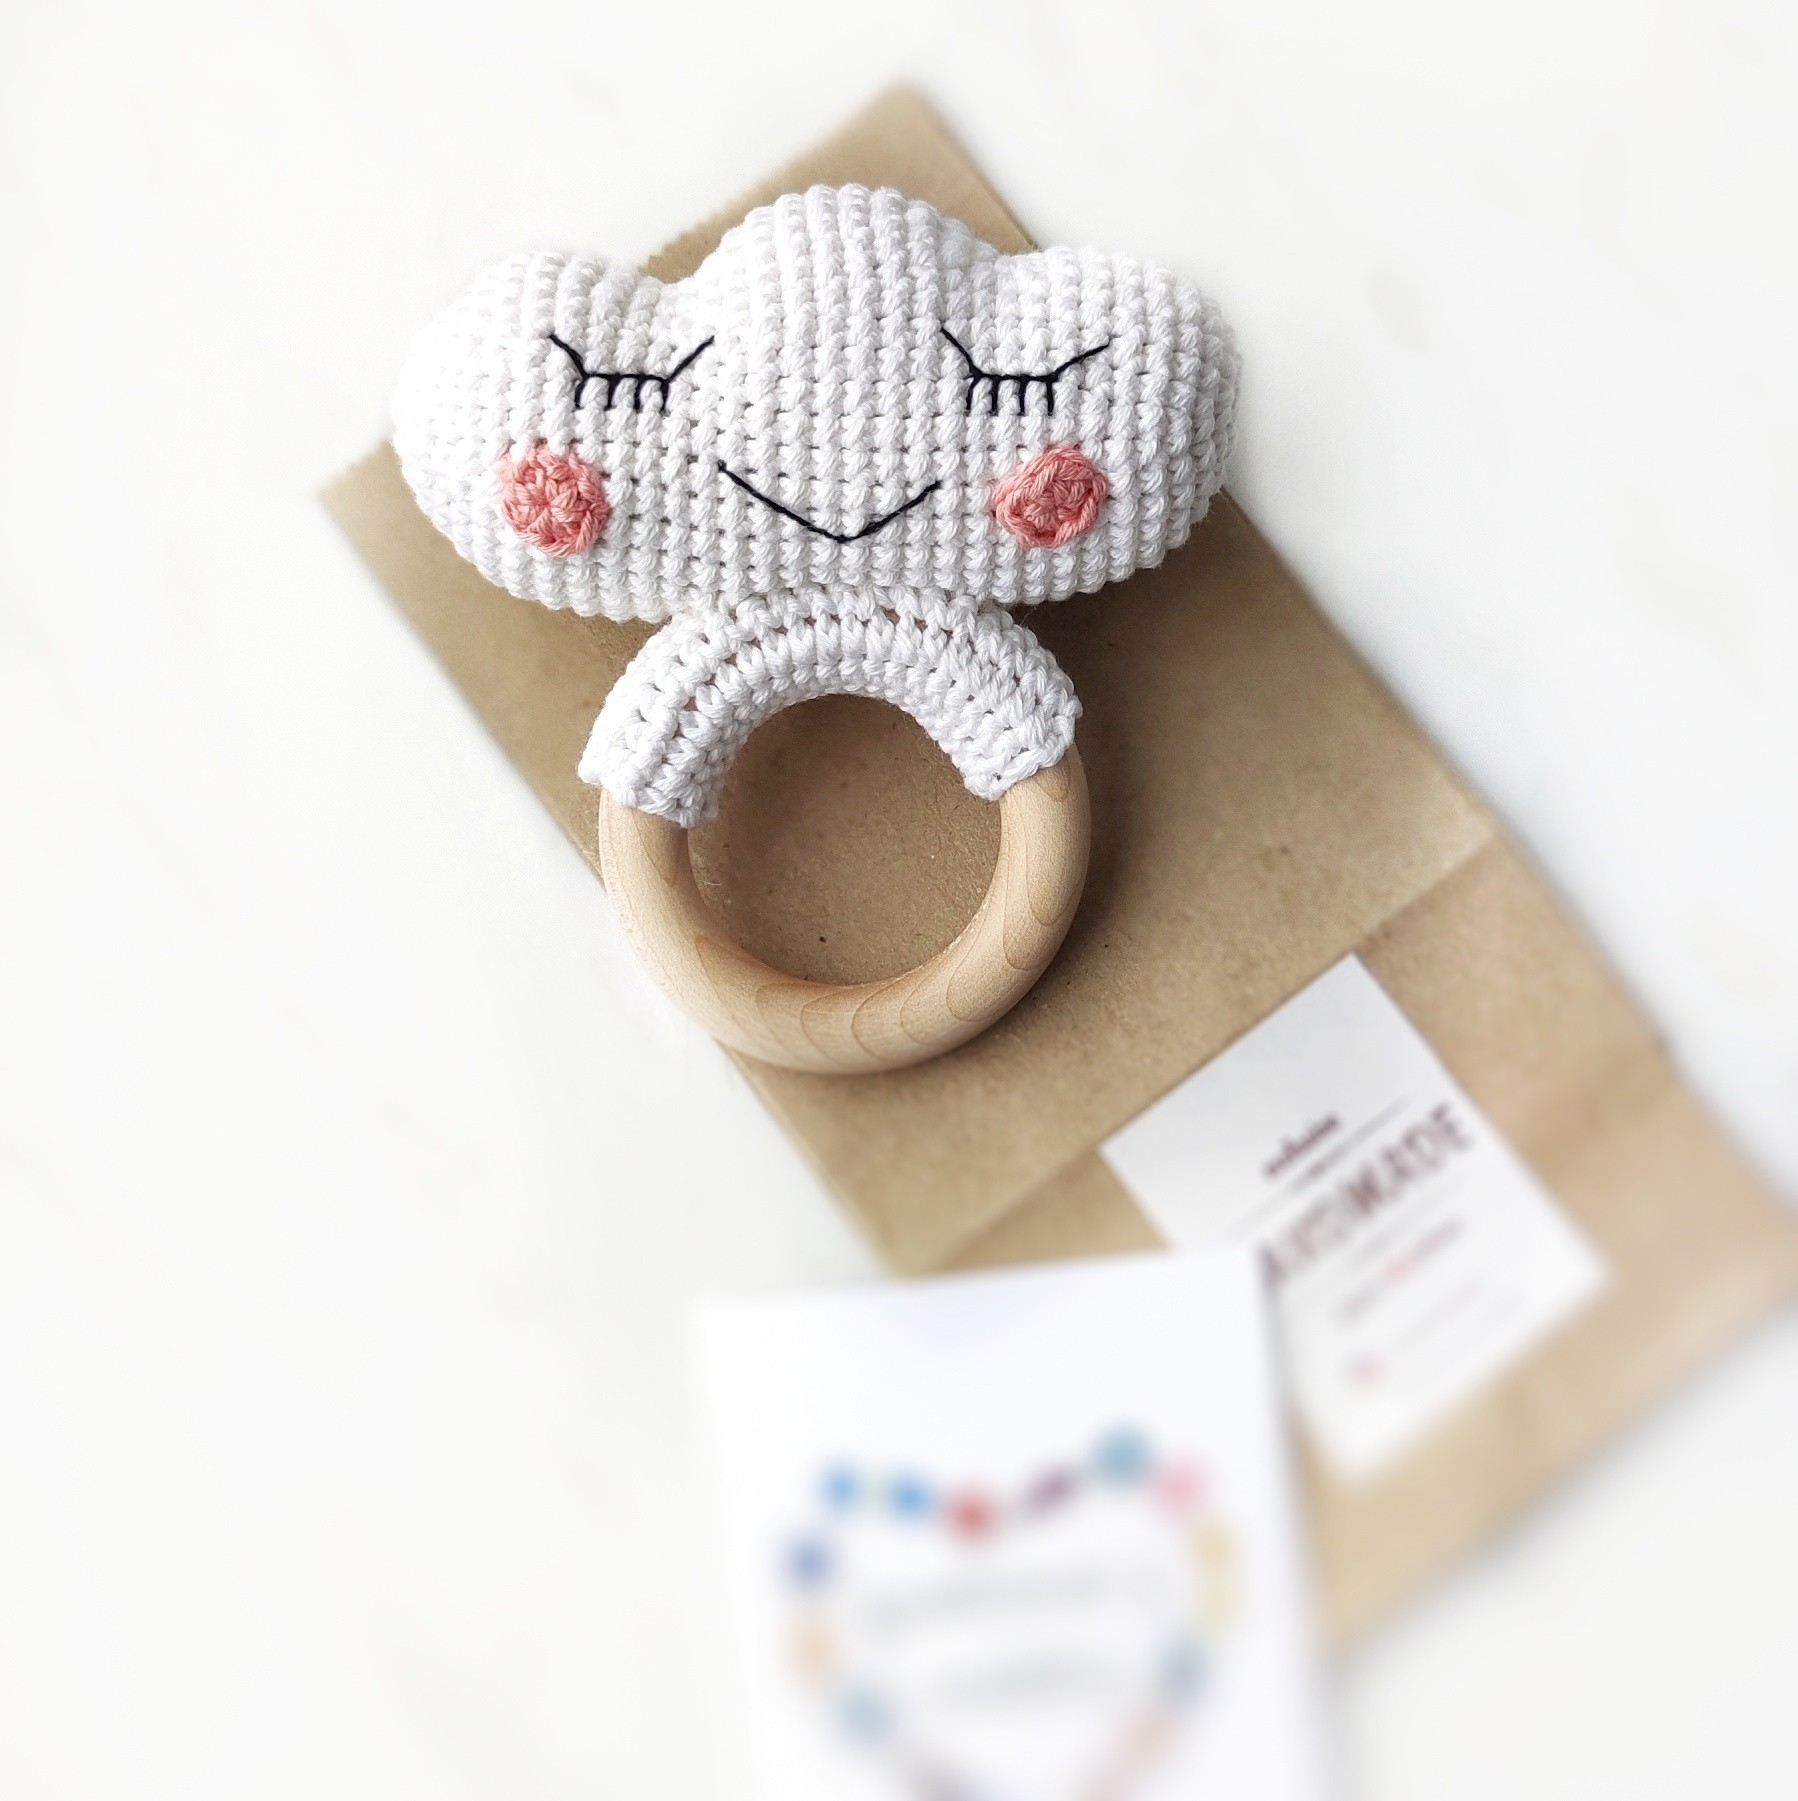 Cloud baby rattle toy. Cute baby shower gift. Gender neutral baby gift, Crochet newborn rattle